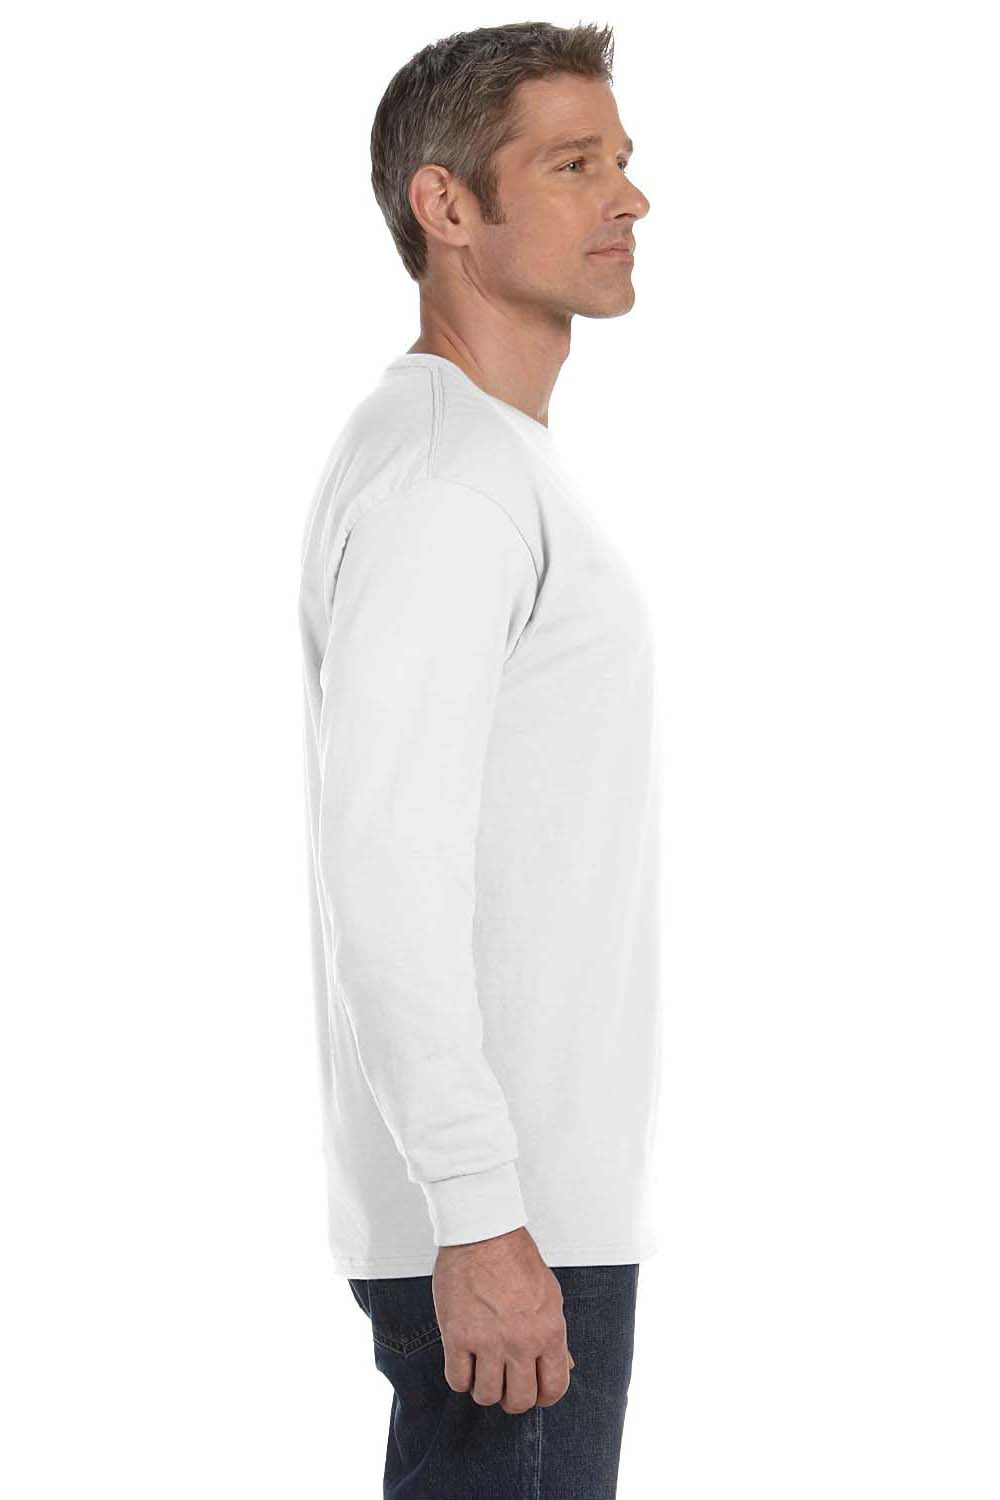 Hanes 5586 Mens ComfortSoft Long Sleeve Crewneck T-Shirt White Side